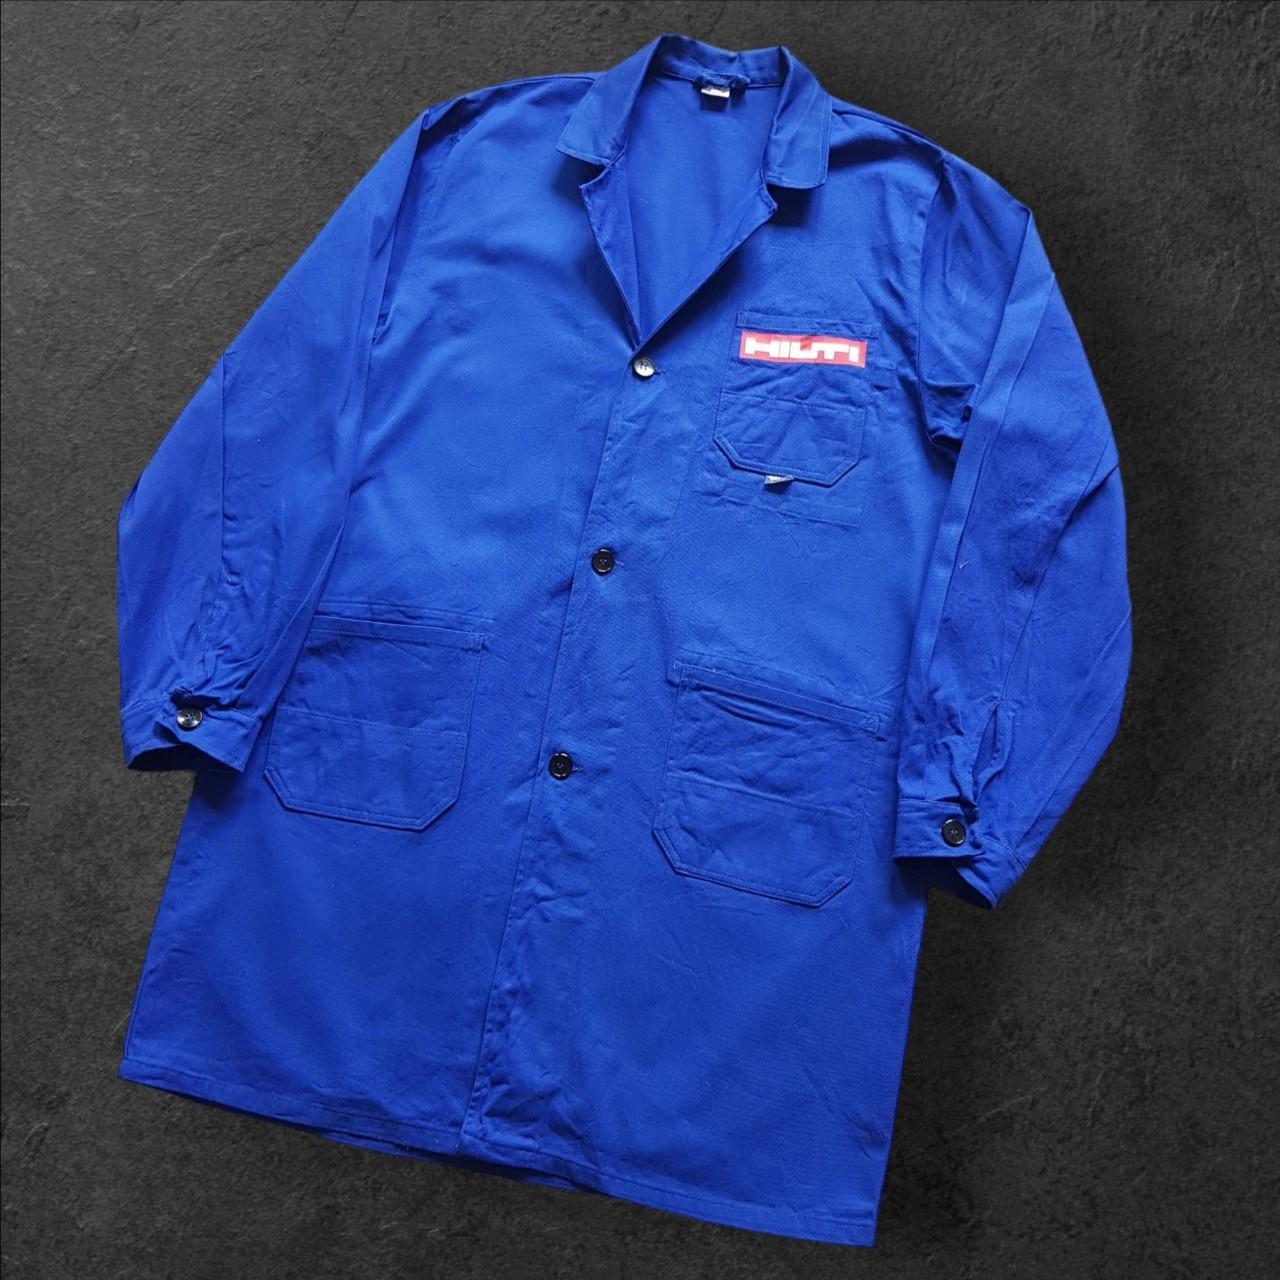 Vintage french "hilti" blue work coat